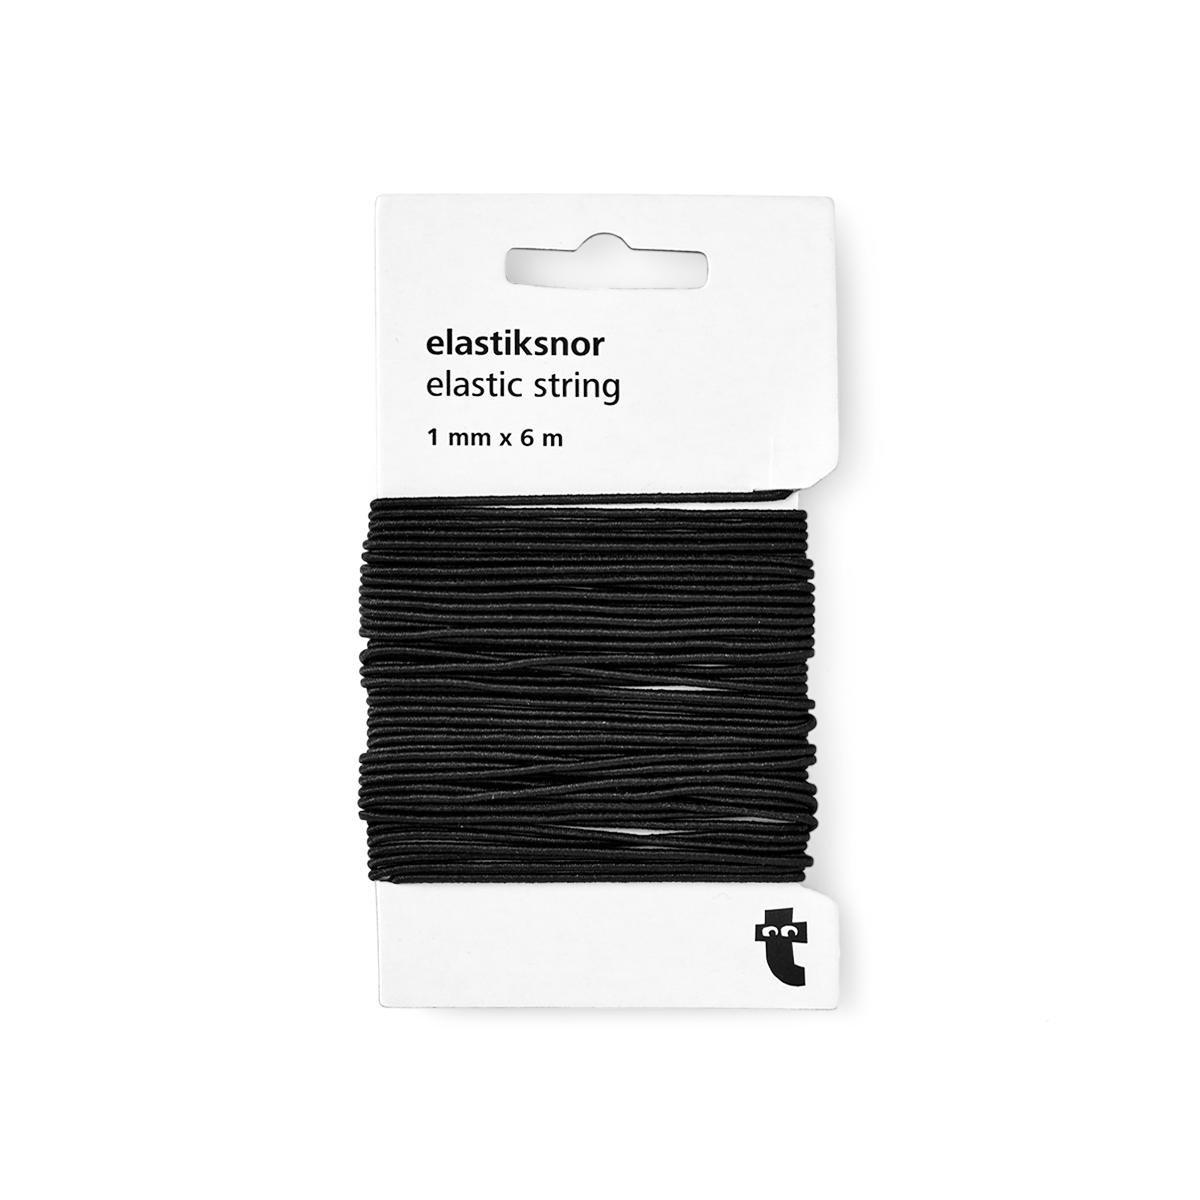 Black elastic string cord